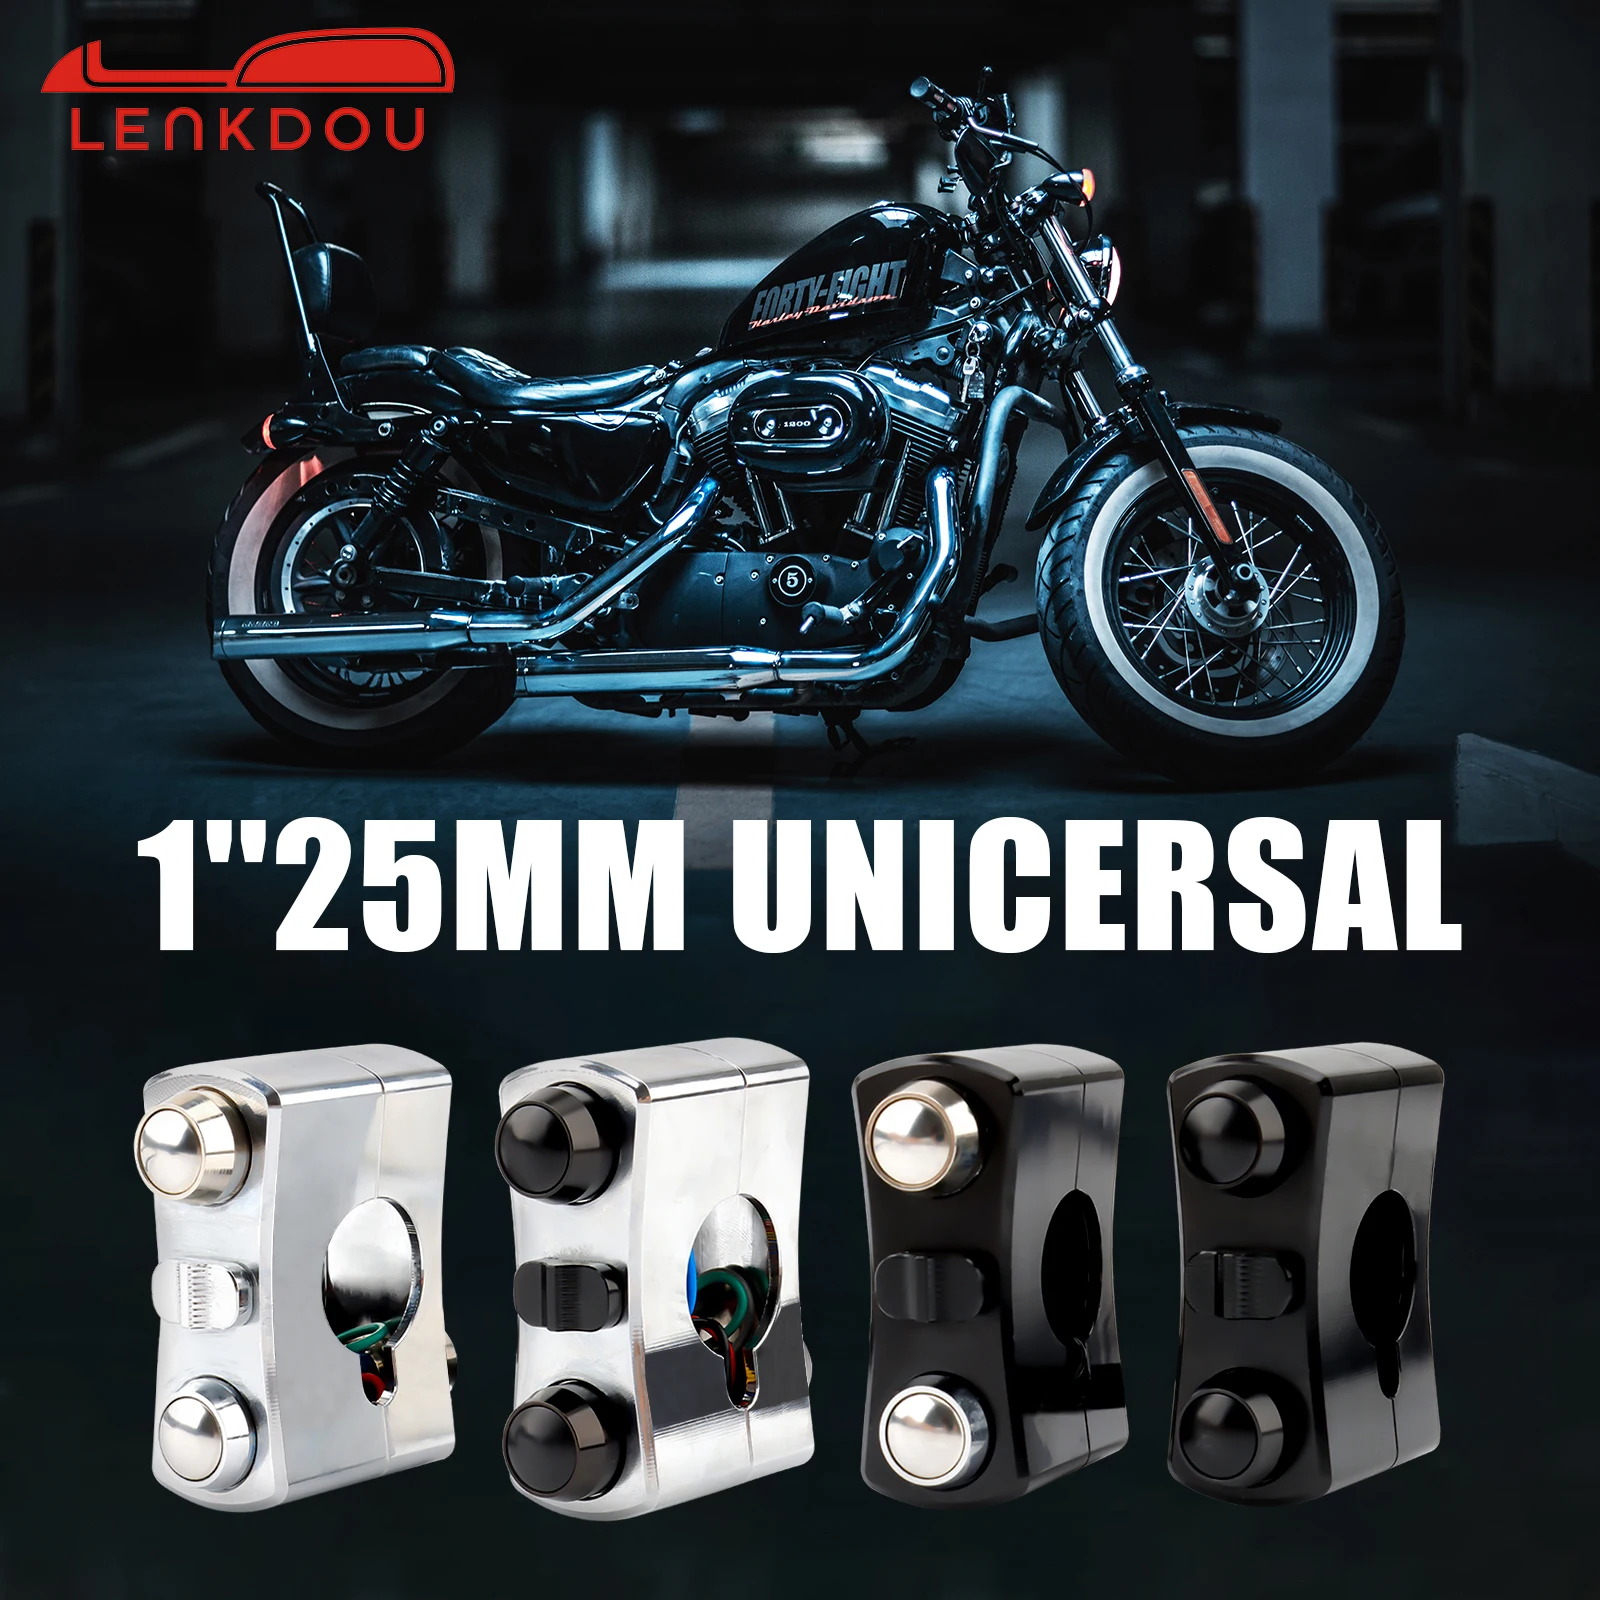 

Переключатель управления на руль мотоцикла, диаметром 1 дюйм, 25 мм, для Harley Touring, Softail Sportster, Dyna, Honda, Suzuki, Yamaha, Kawasaki